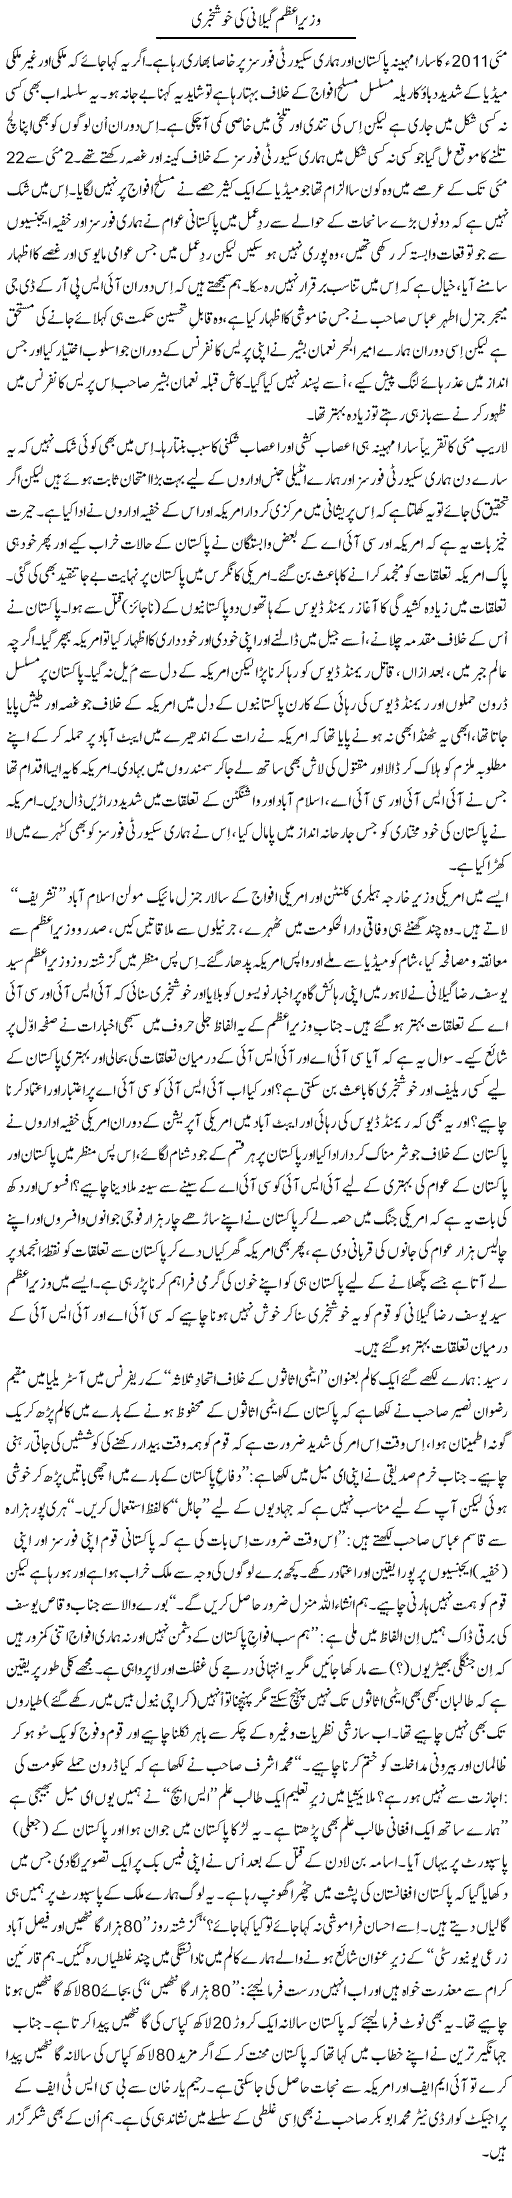 Good News From Geelani Express Column Tanvir Qasir 31 May 2011